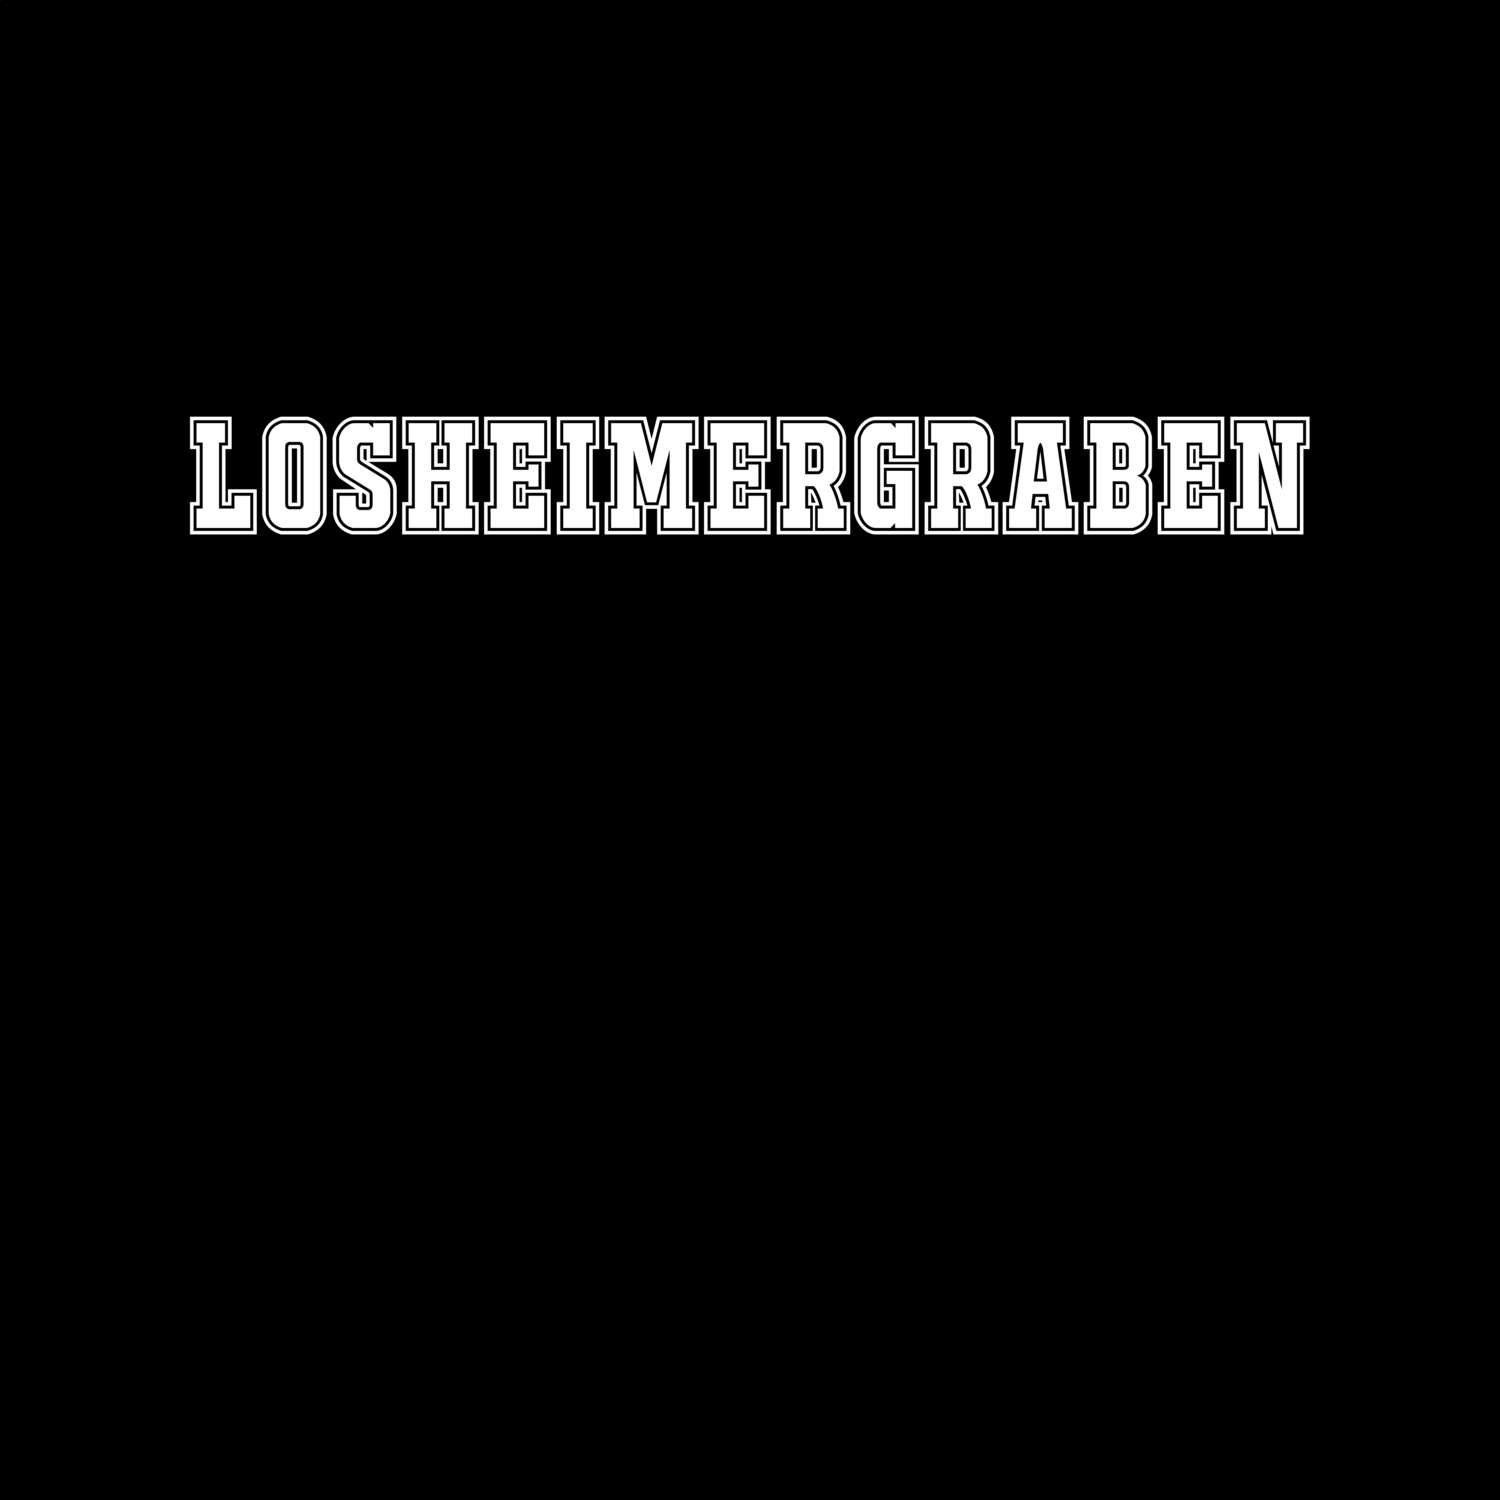 Losheimergraben T-Shirt »Classic«